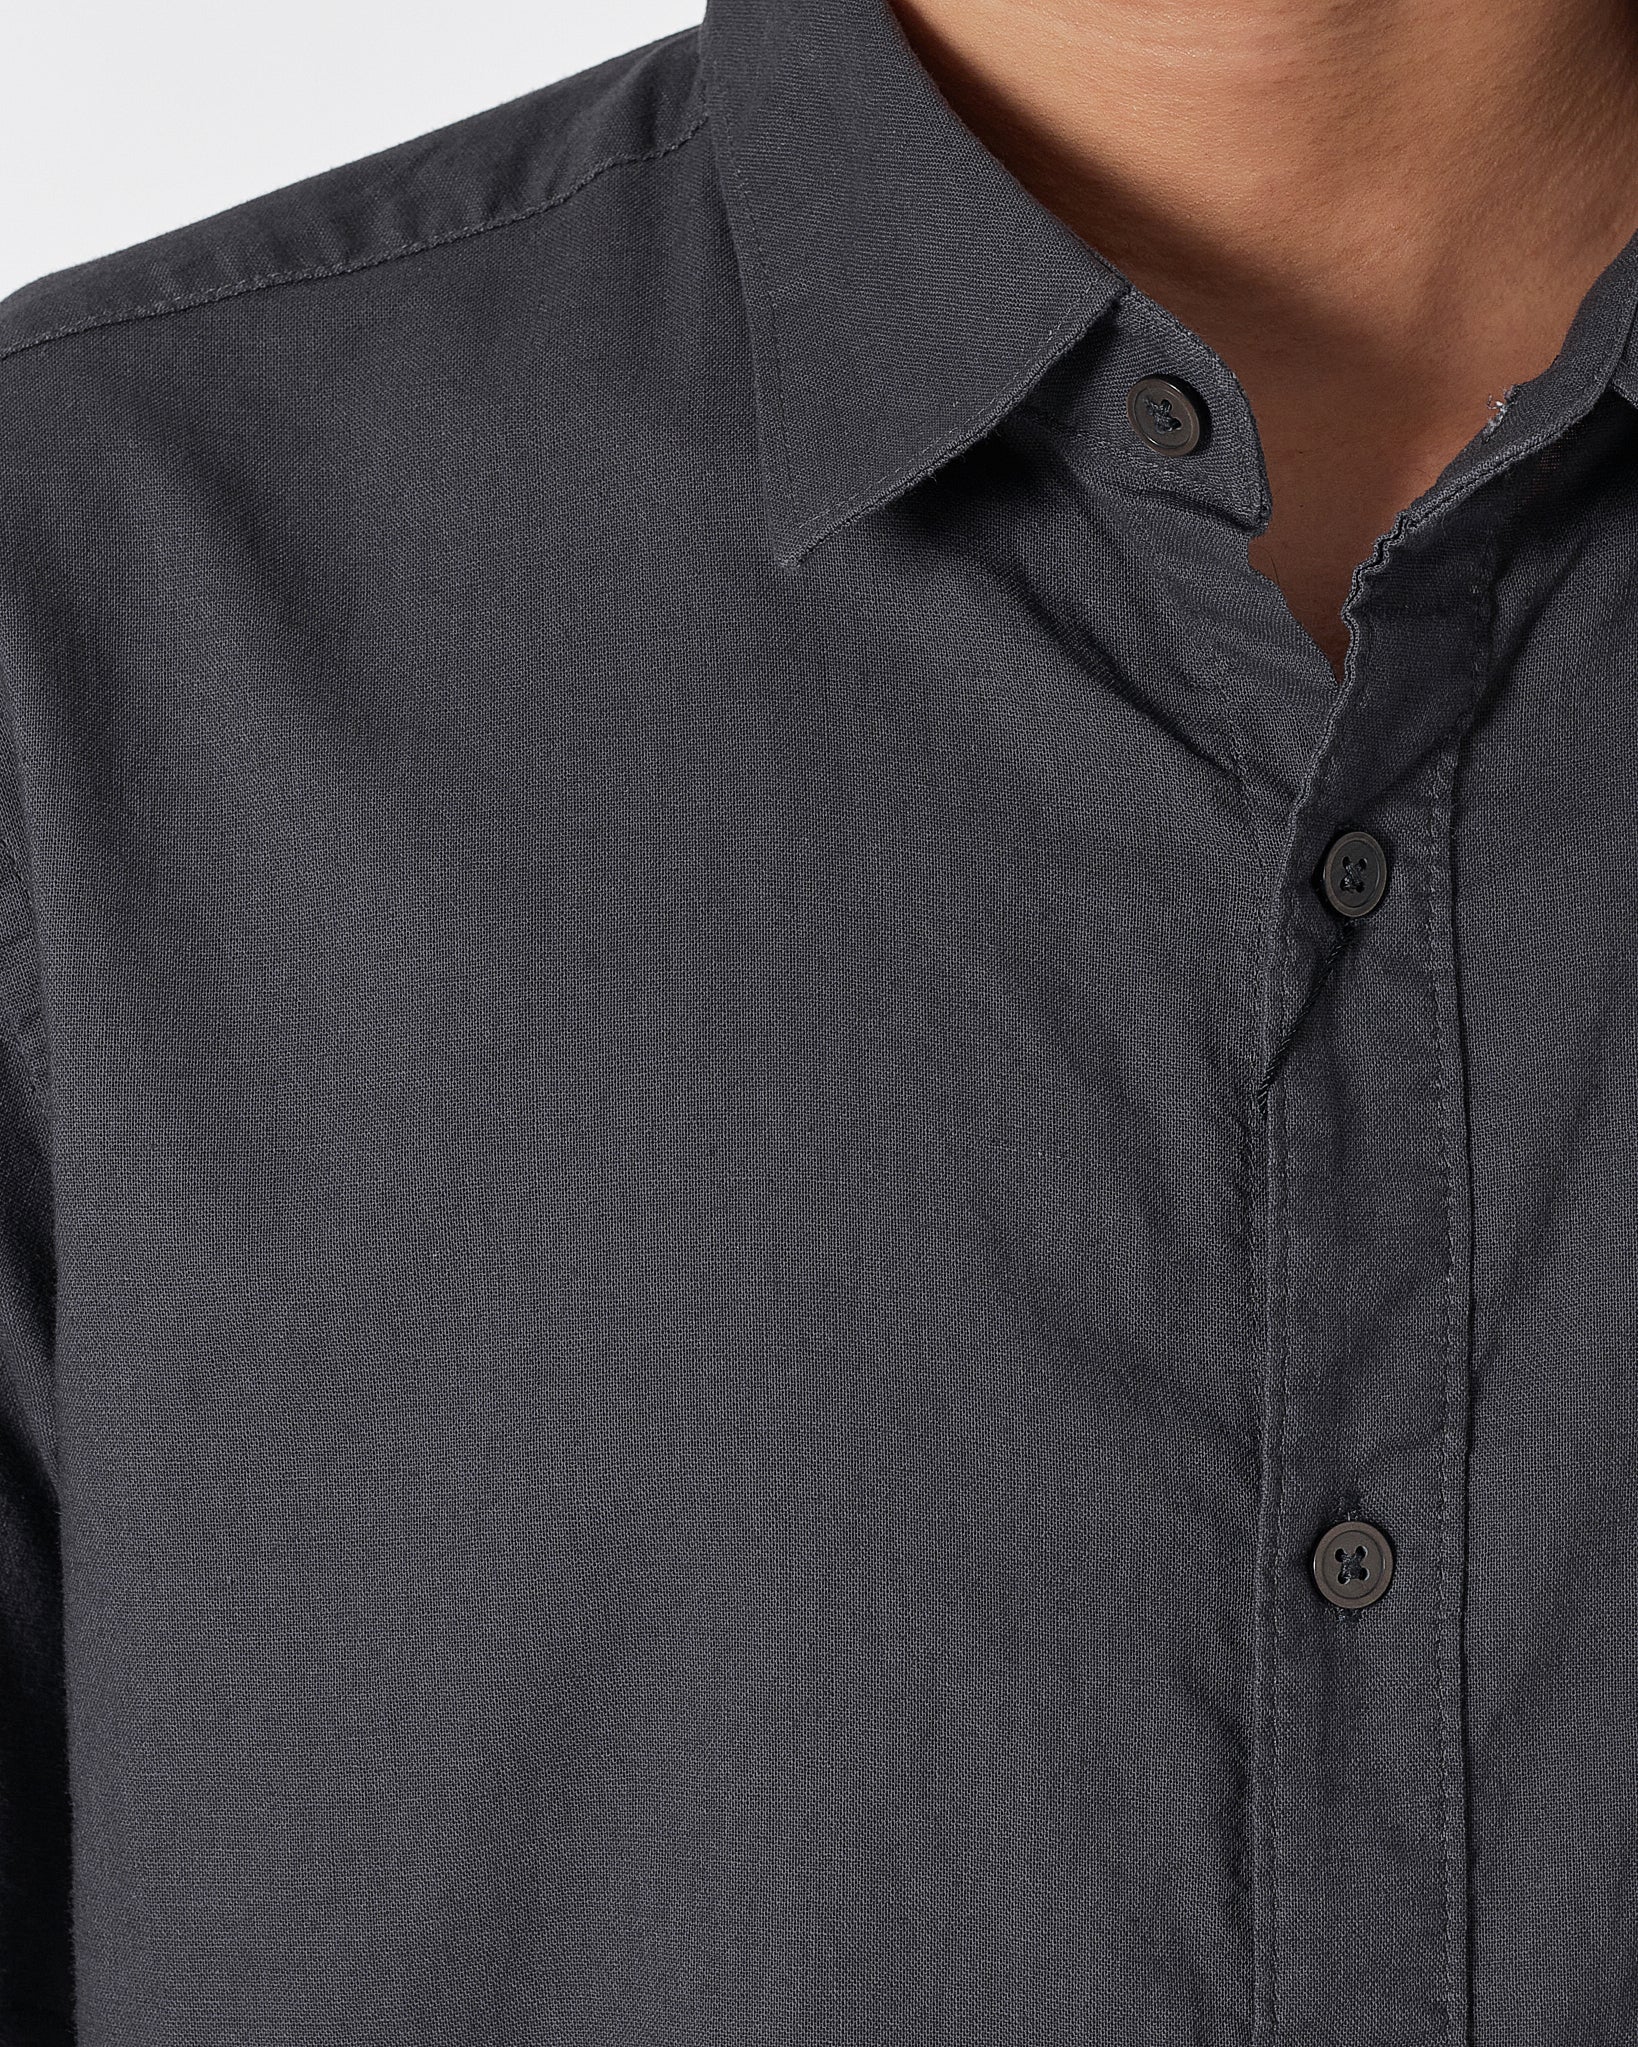 CK Linen Men Dark Grey Shirts Short Sleeve 20.90